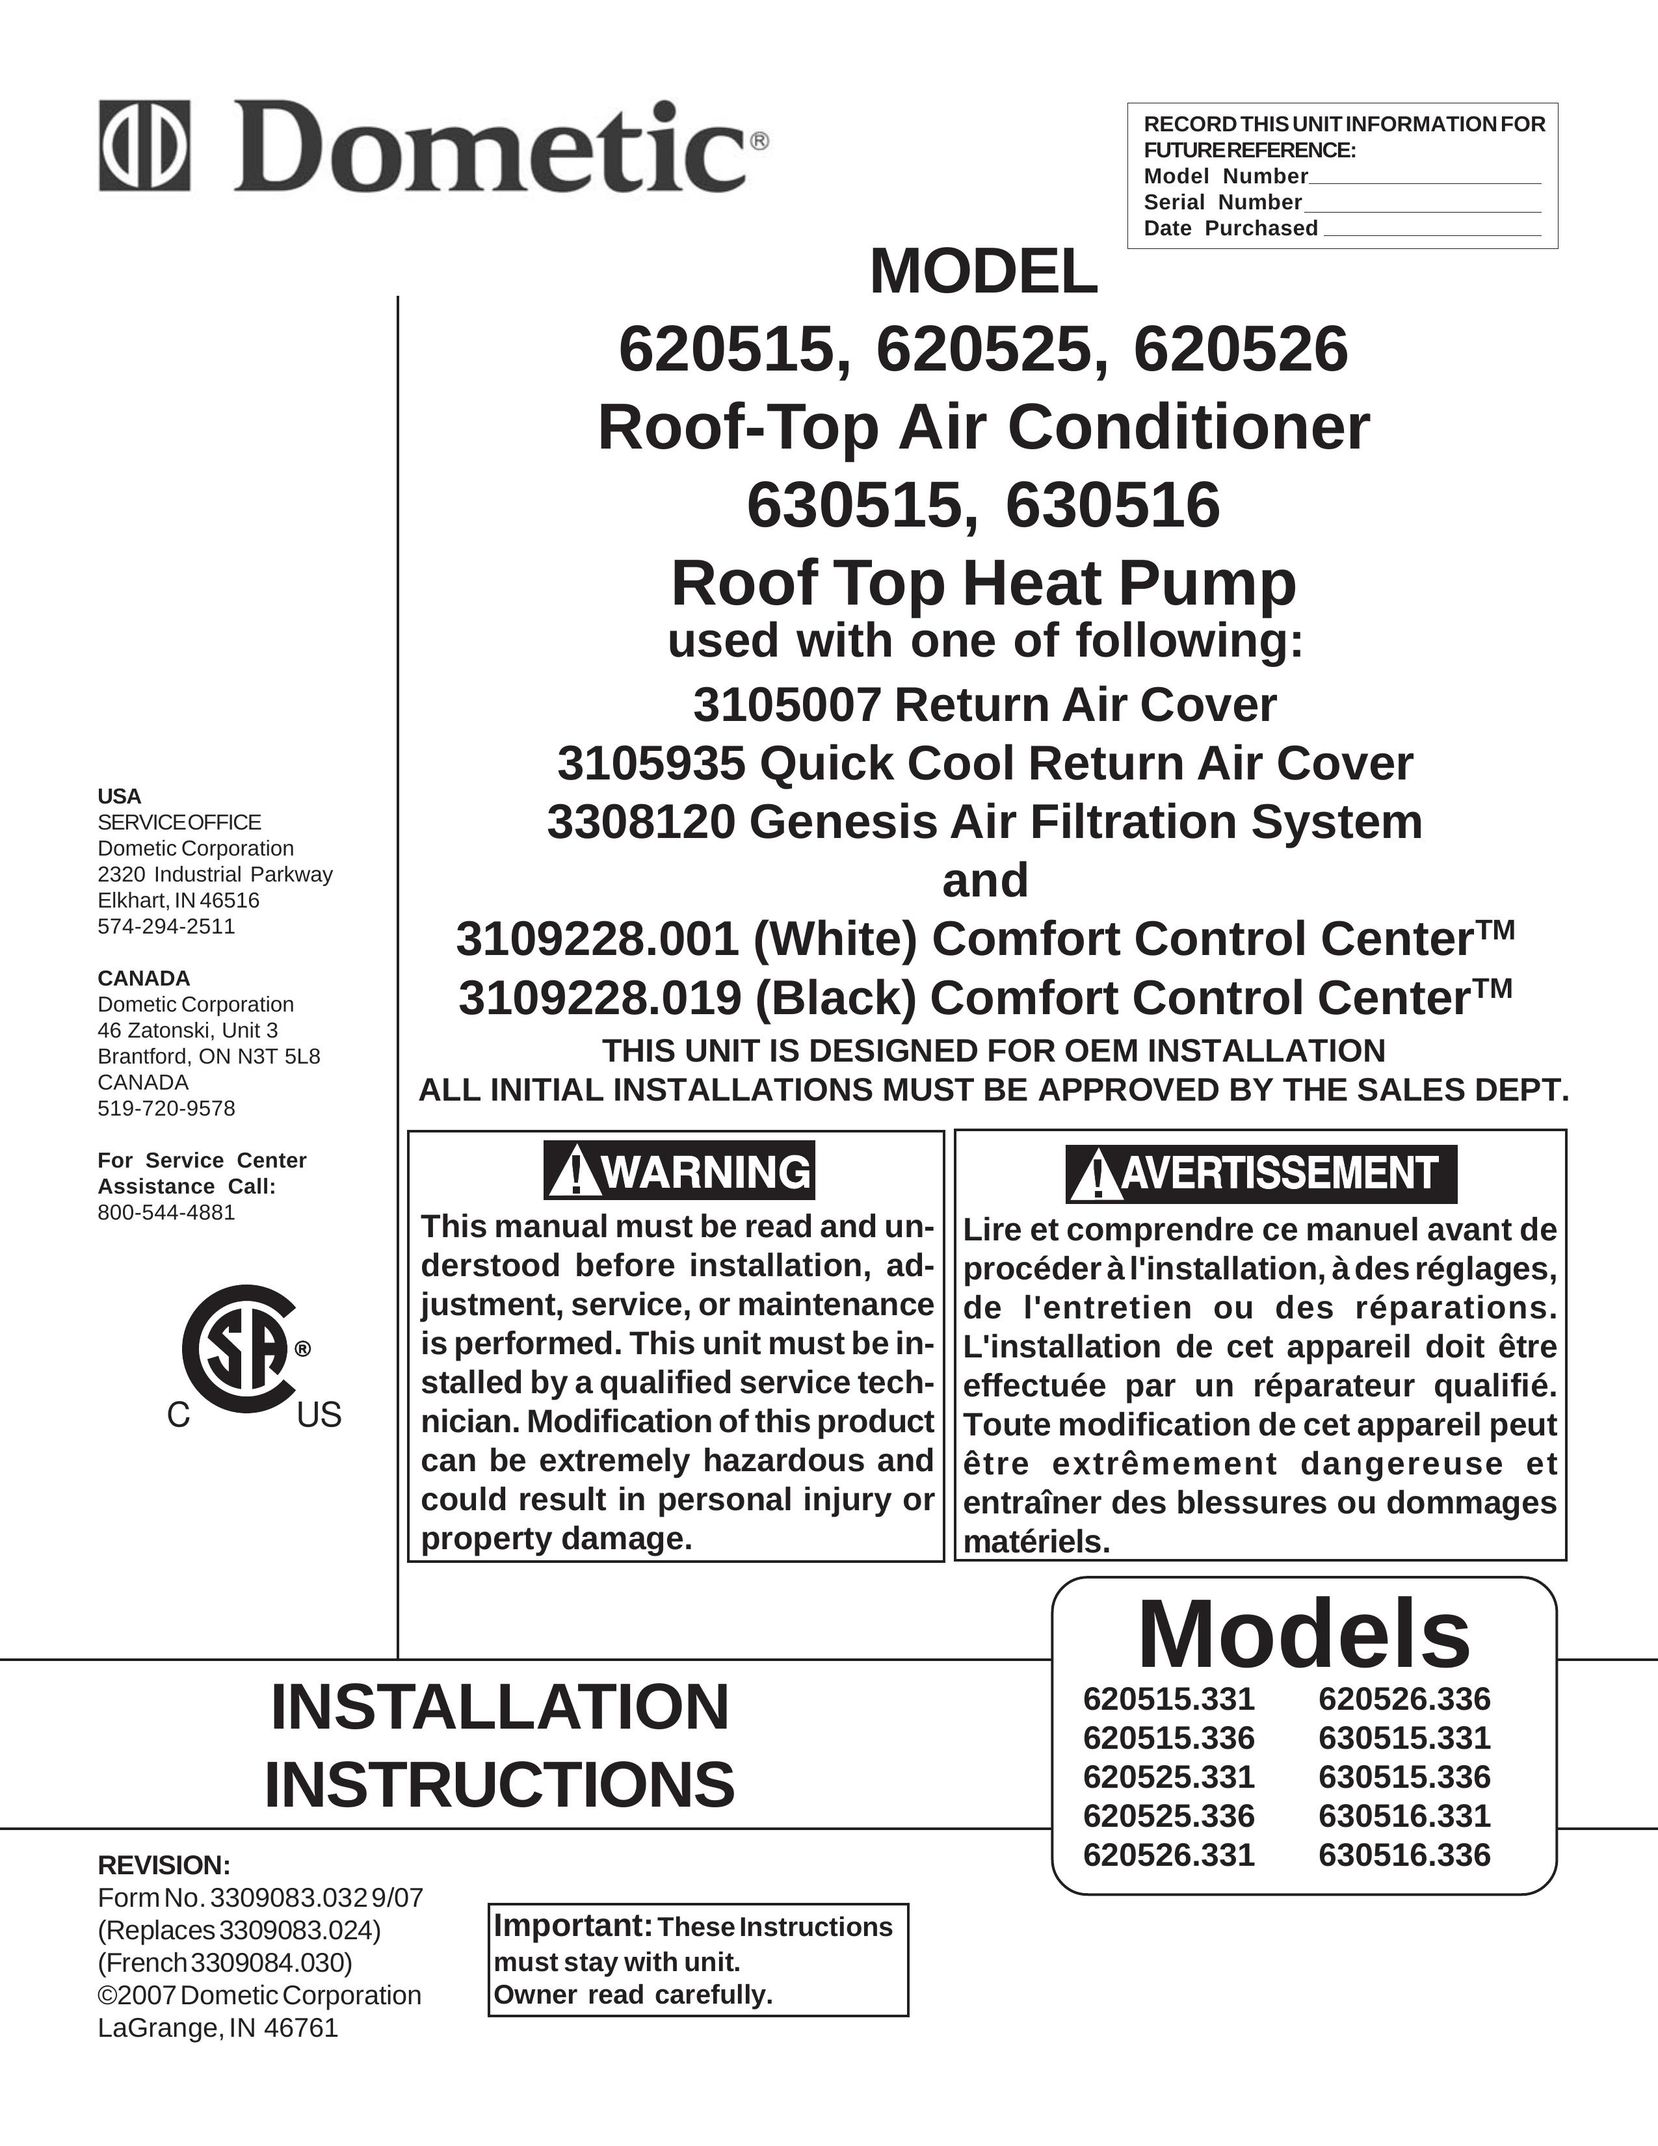 Dometic 630515.336 Air Conditioner User Manual